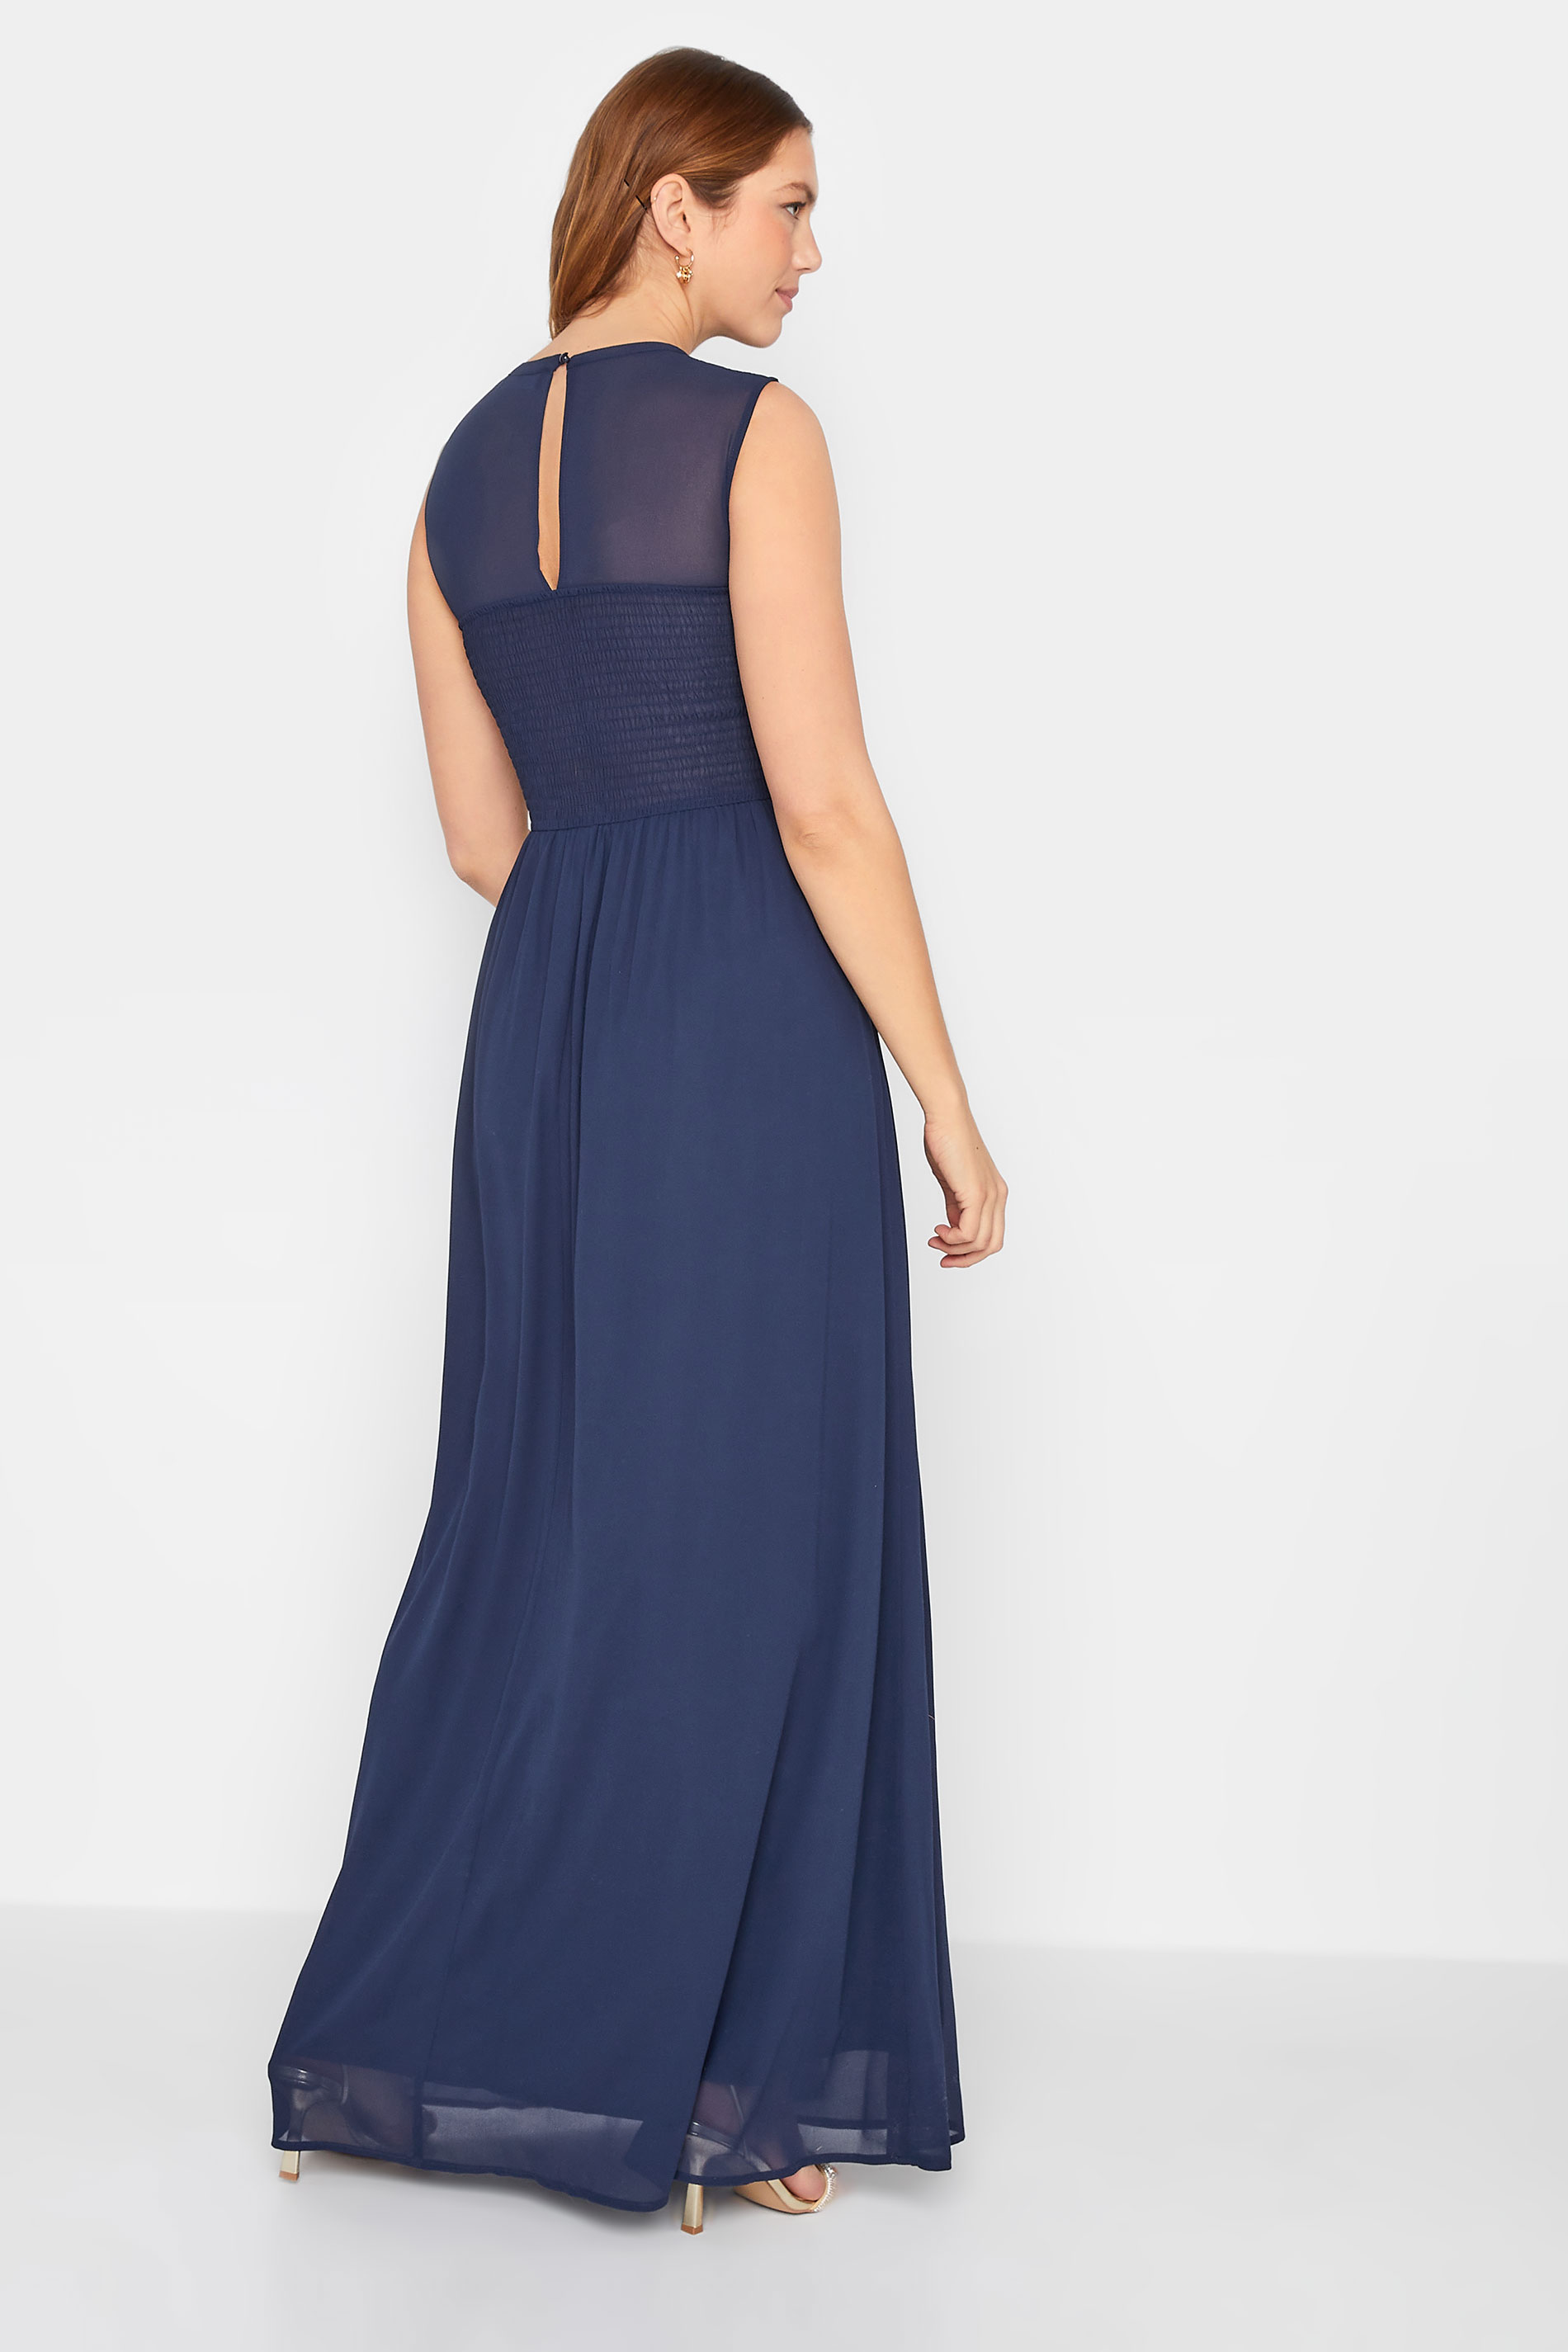 LTS Tall Women's Navy Blue Lace Chiffon Maxi Dress | Long Tall Sally  3